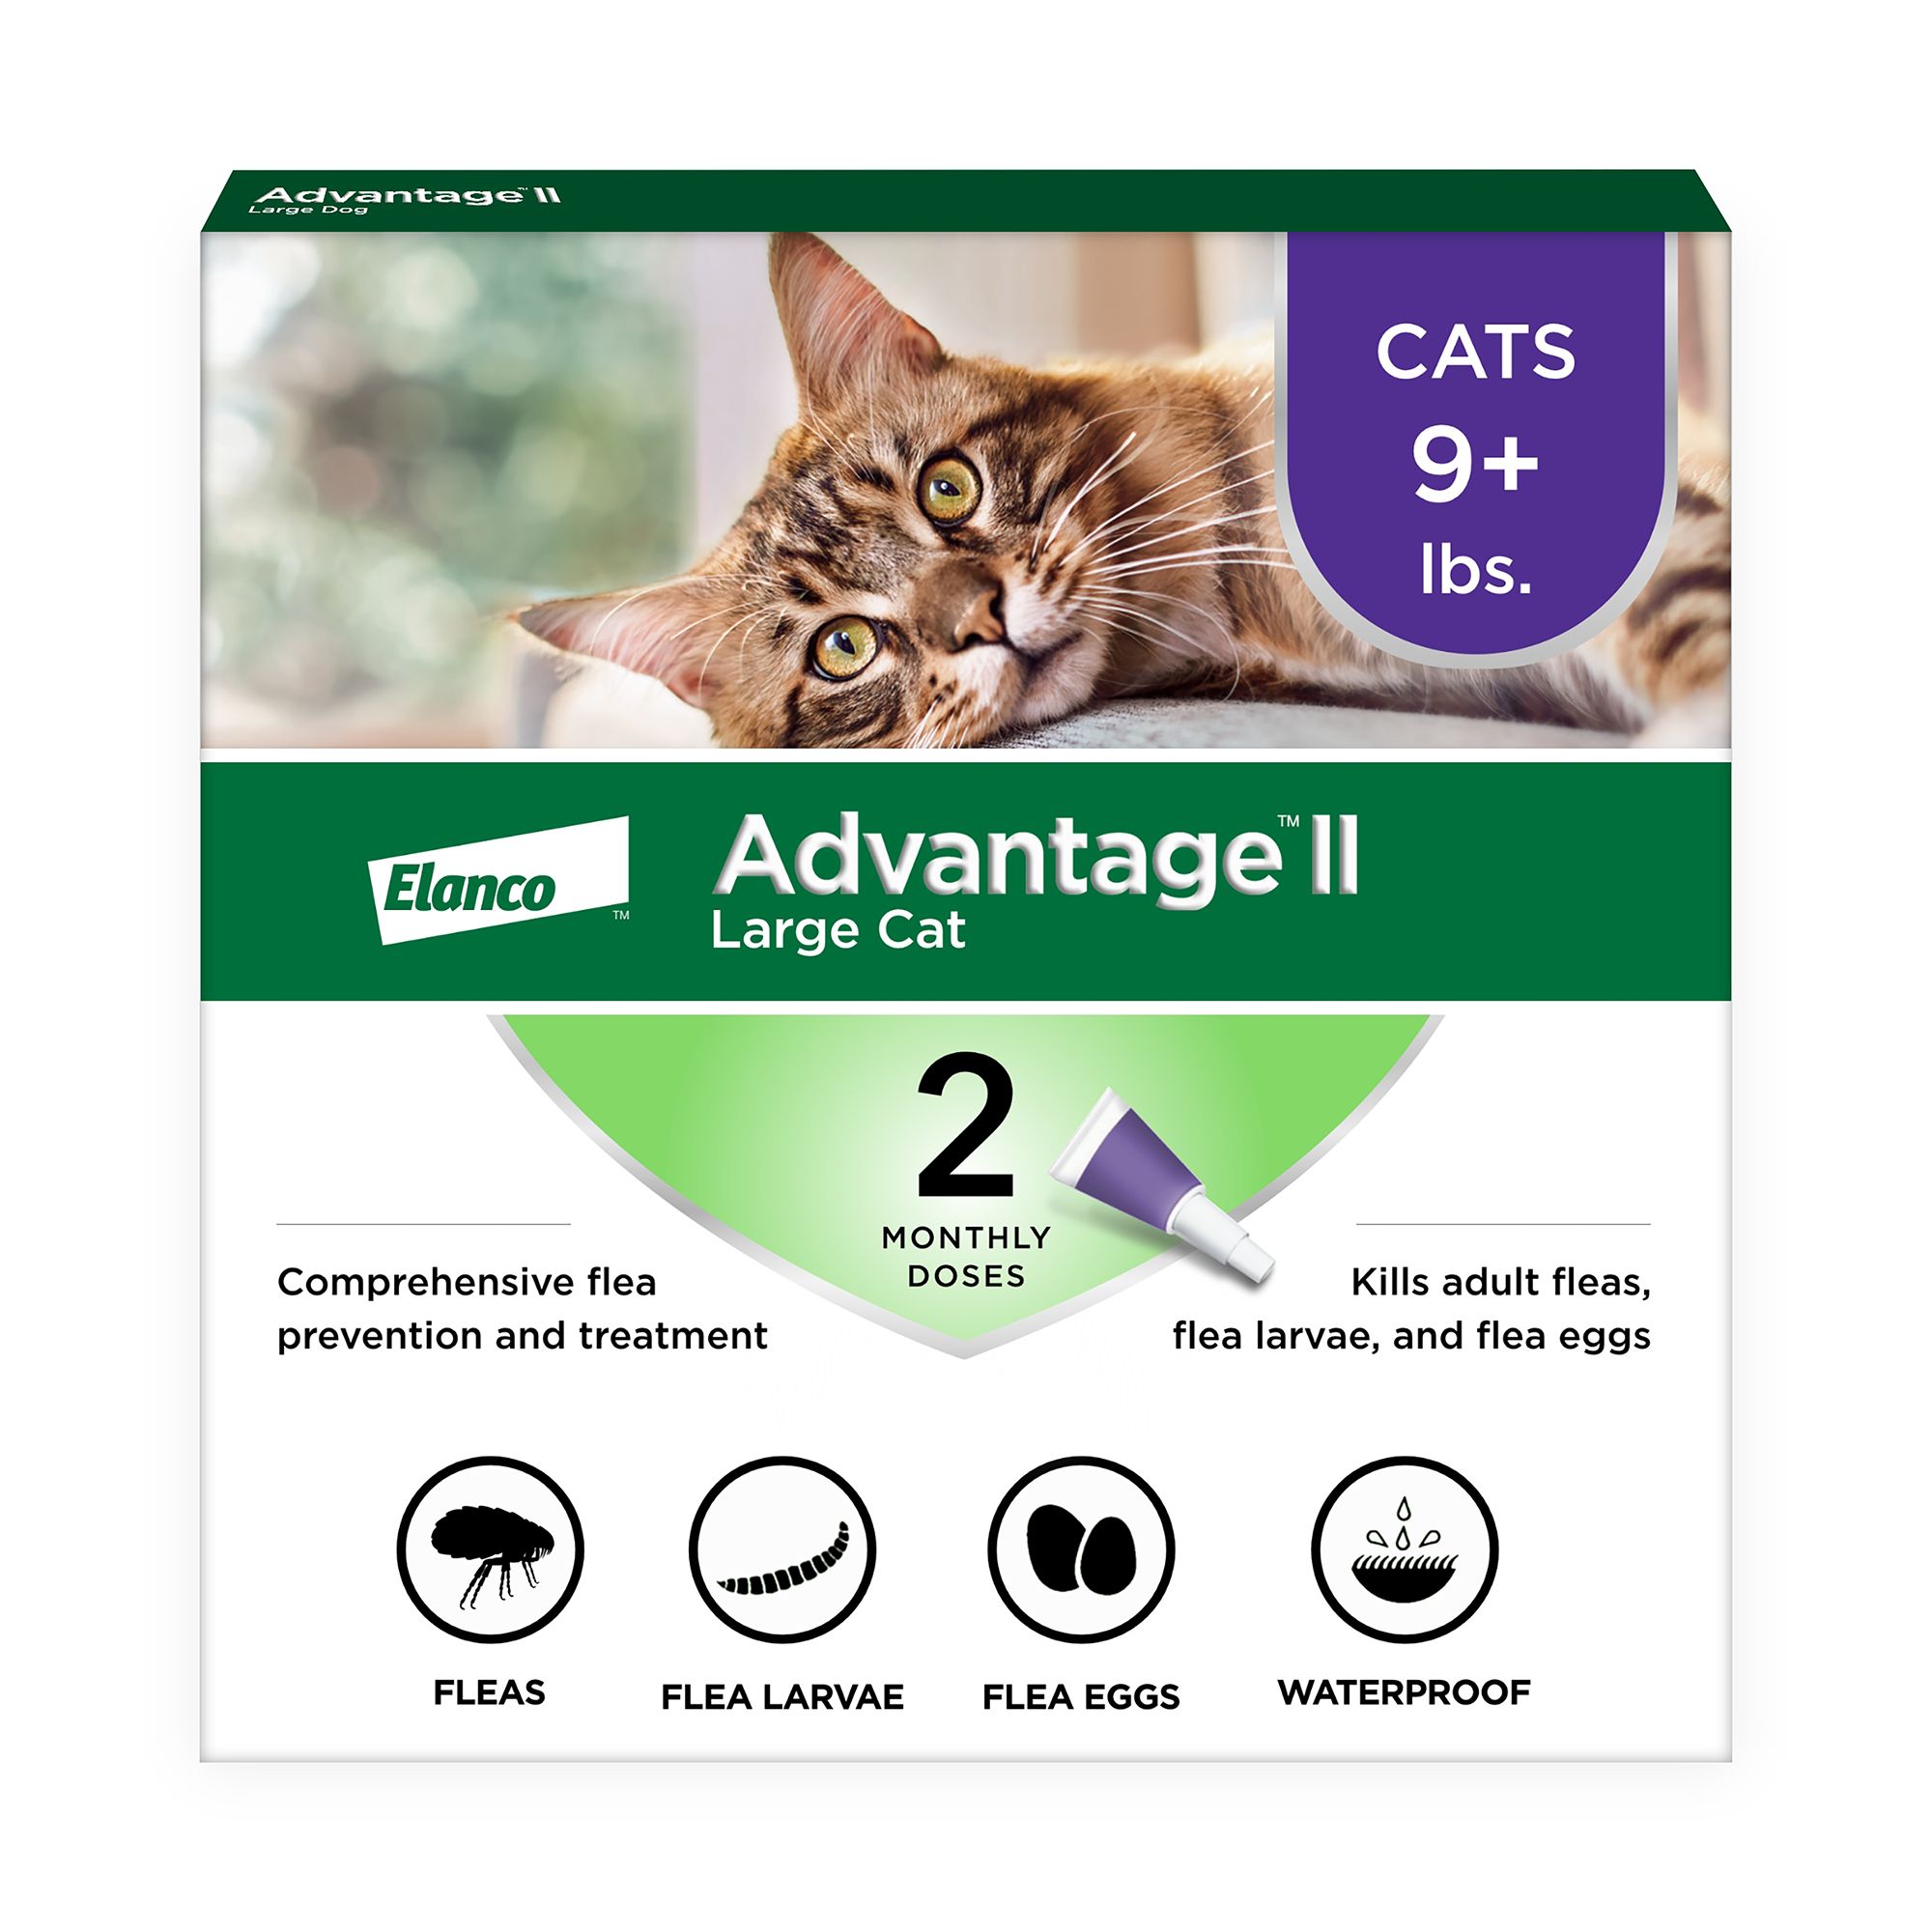 Advantage® II Over 9 lbs Cat Flea 